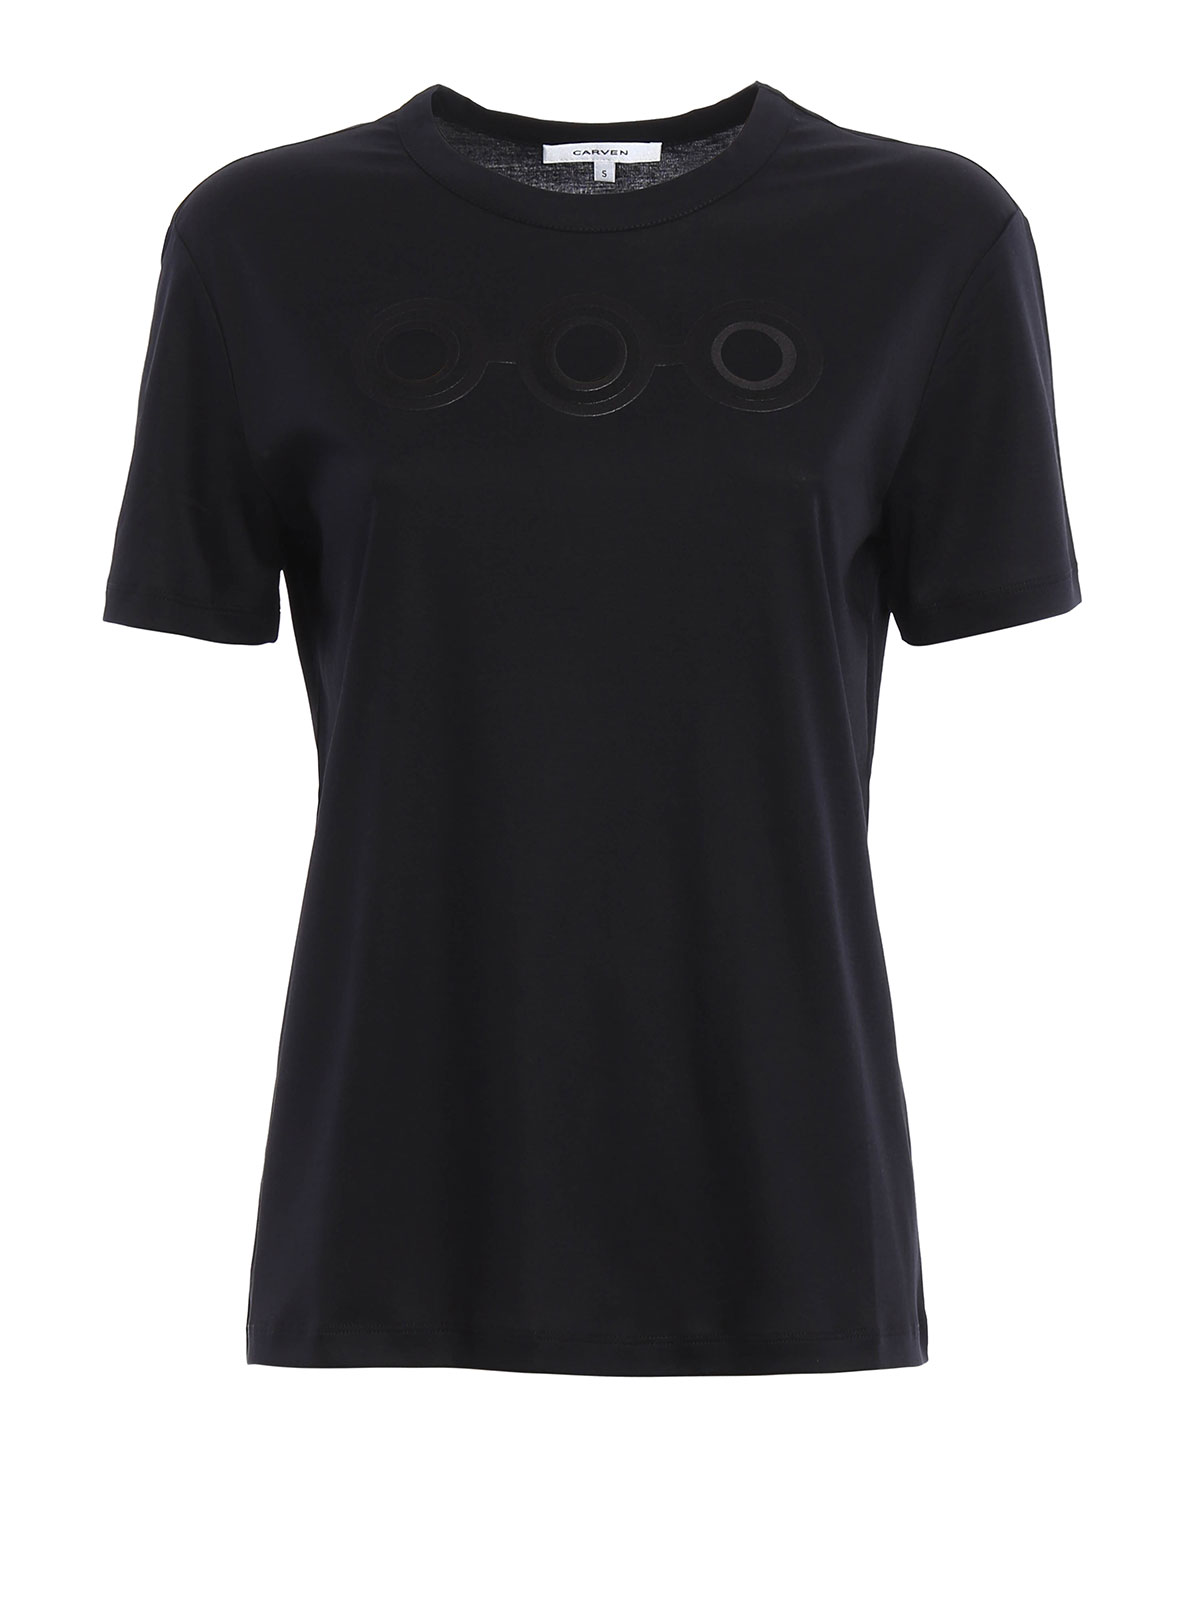 T-shirts Carven - Laser cut T-shirt - 752TS30999 | Shop online at iKRIX